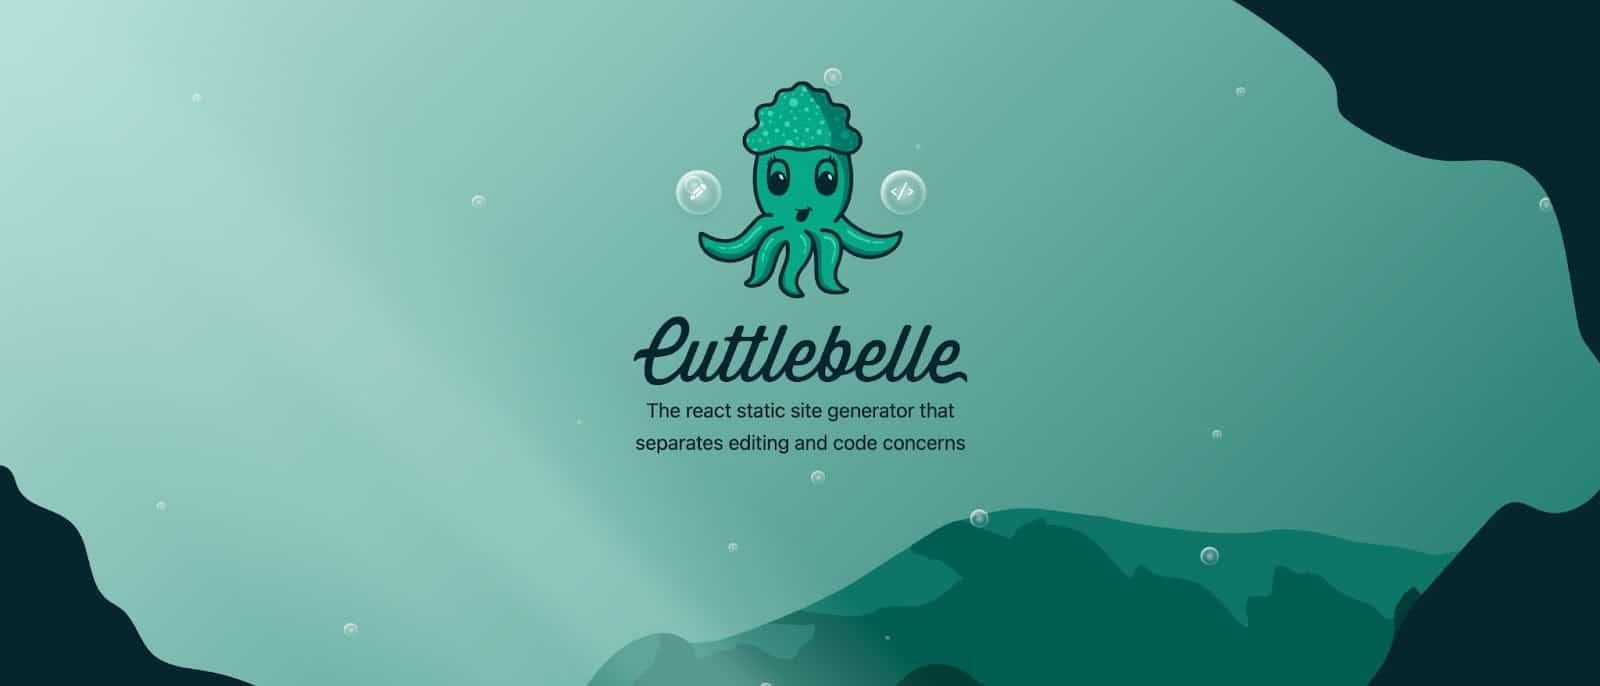 A página inicial do site Cuttlebelle